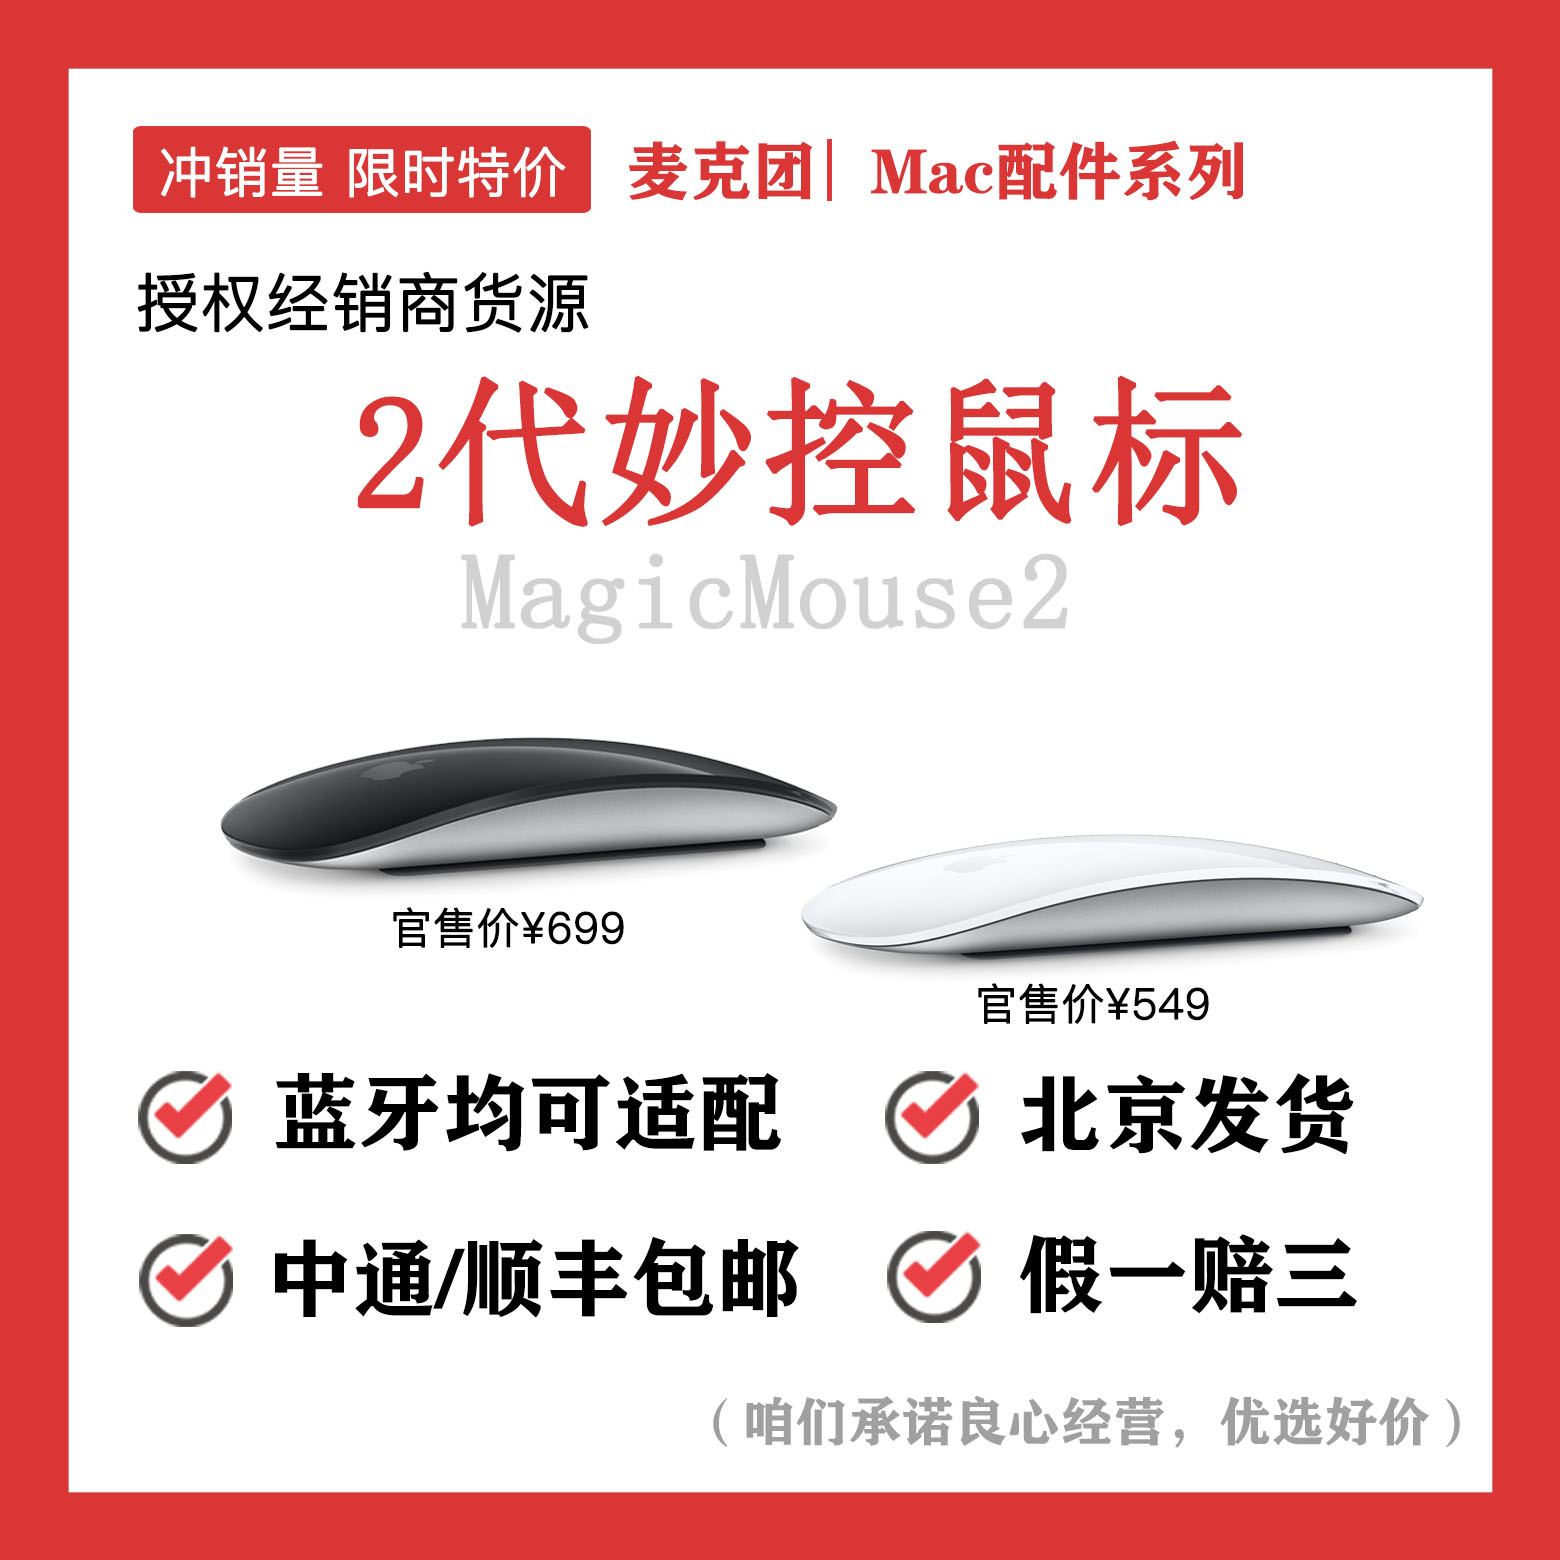 Apple/ƻ MacBook ¿Magic Mouse 2 ƻ 